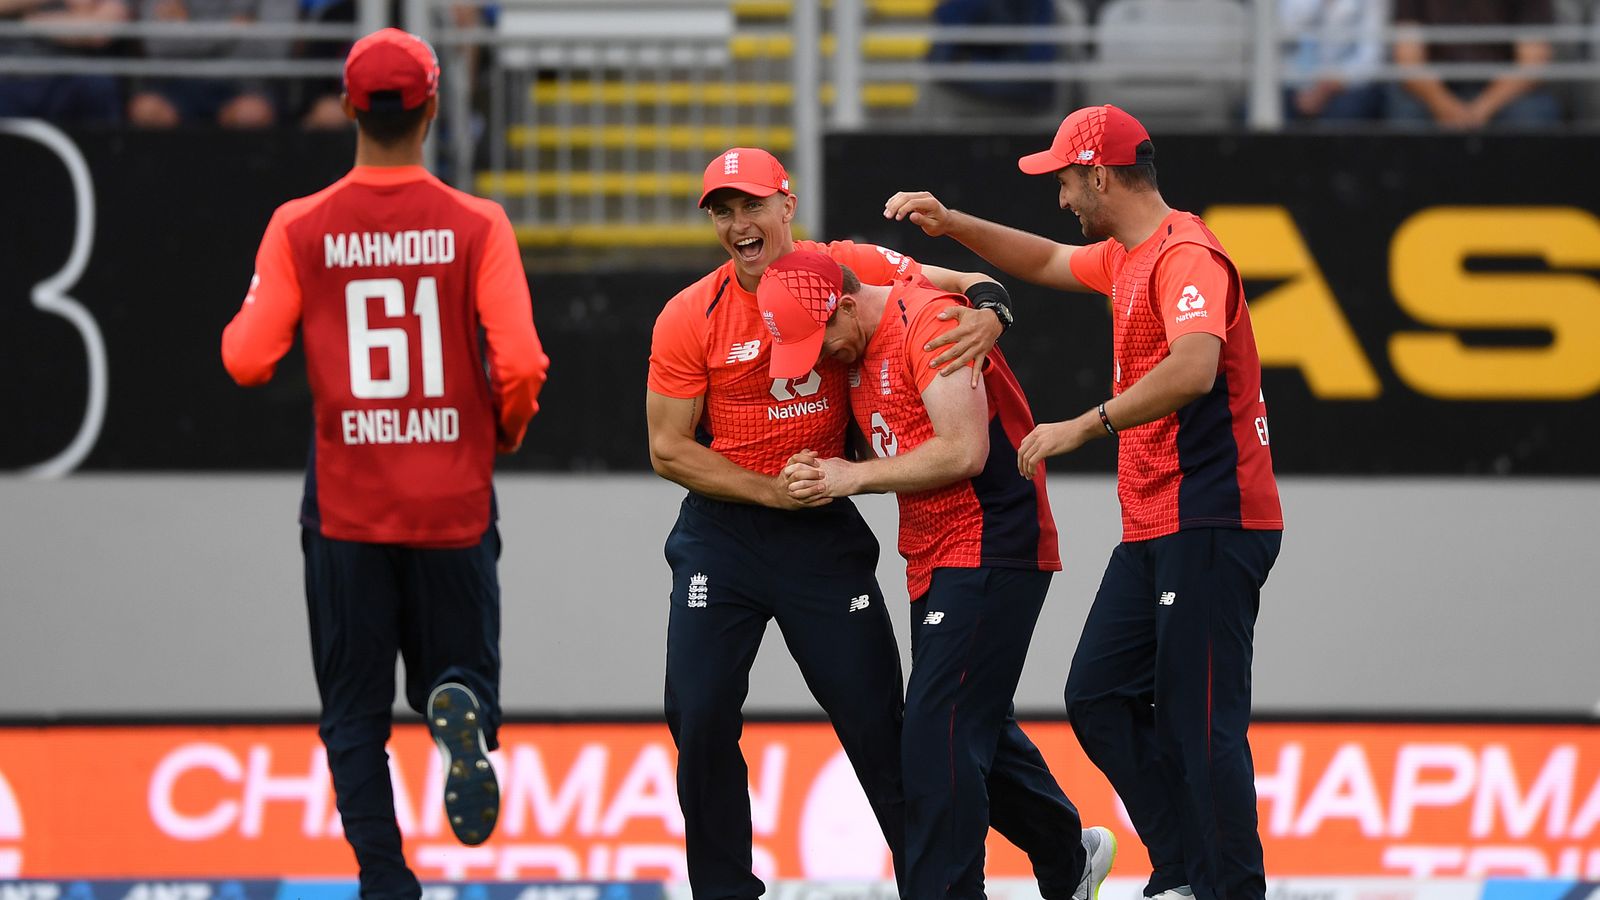 Cricket T20I: England beat New Zealand in Super Over thriller - Sky News